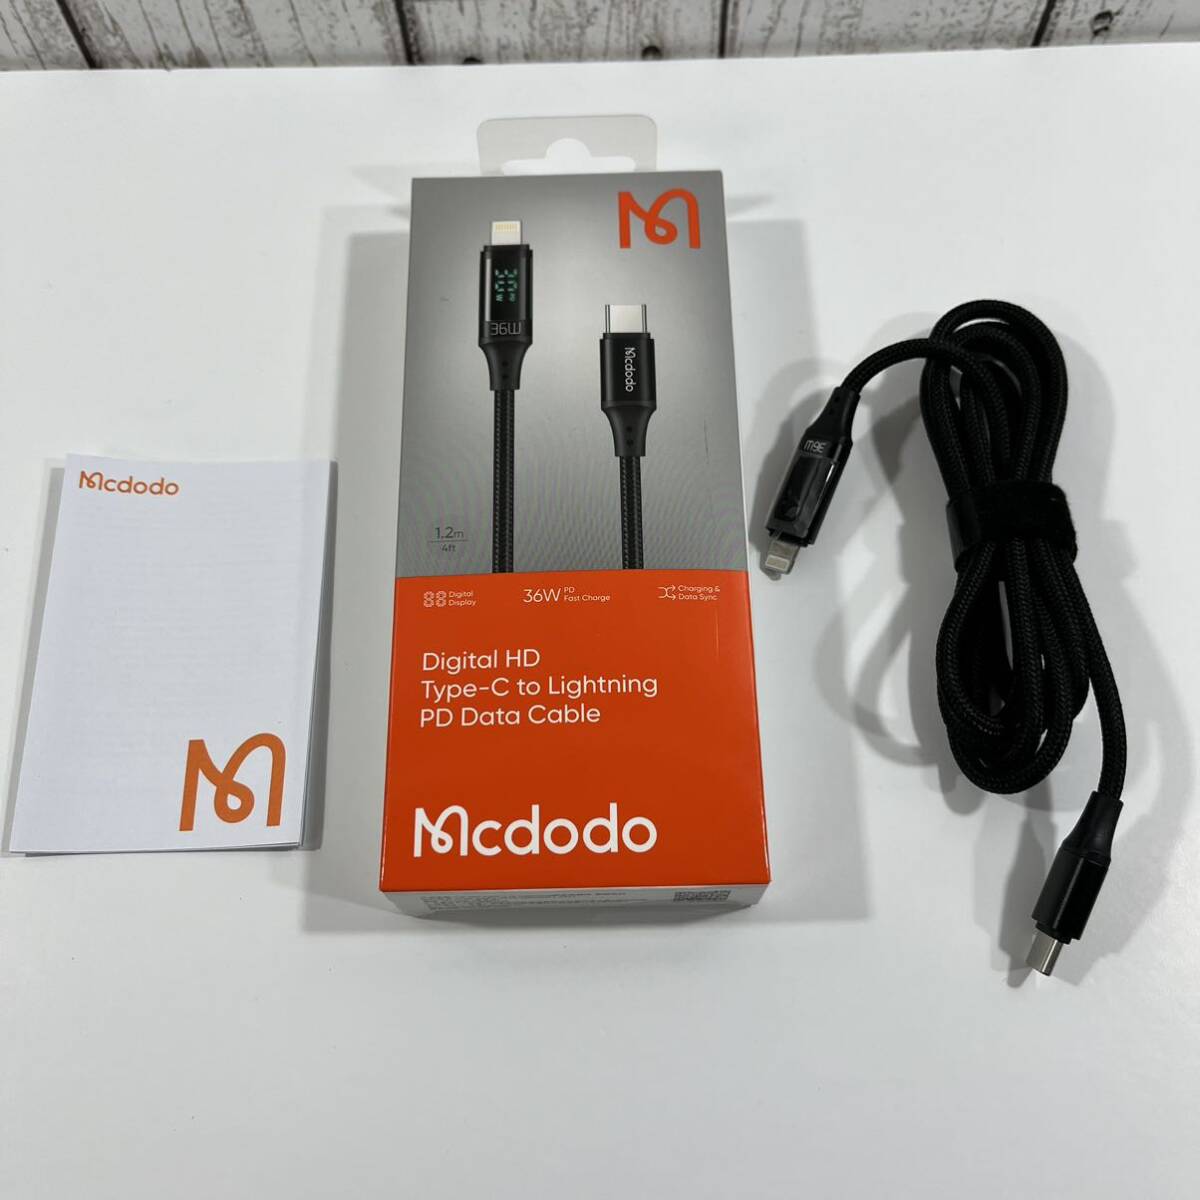 Mcdodo USB Type-C ライトニングケーブル 出力スクリーン 1.2m 36W PD急速充電 高速データ転送 充電ケーブル スマートデュアルチップ搭載